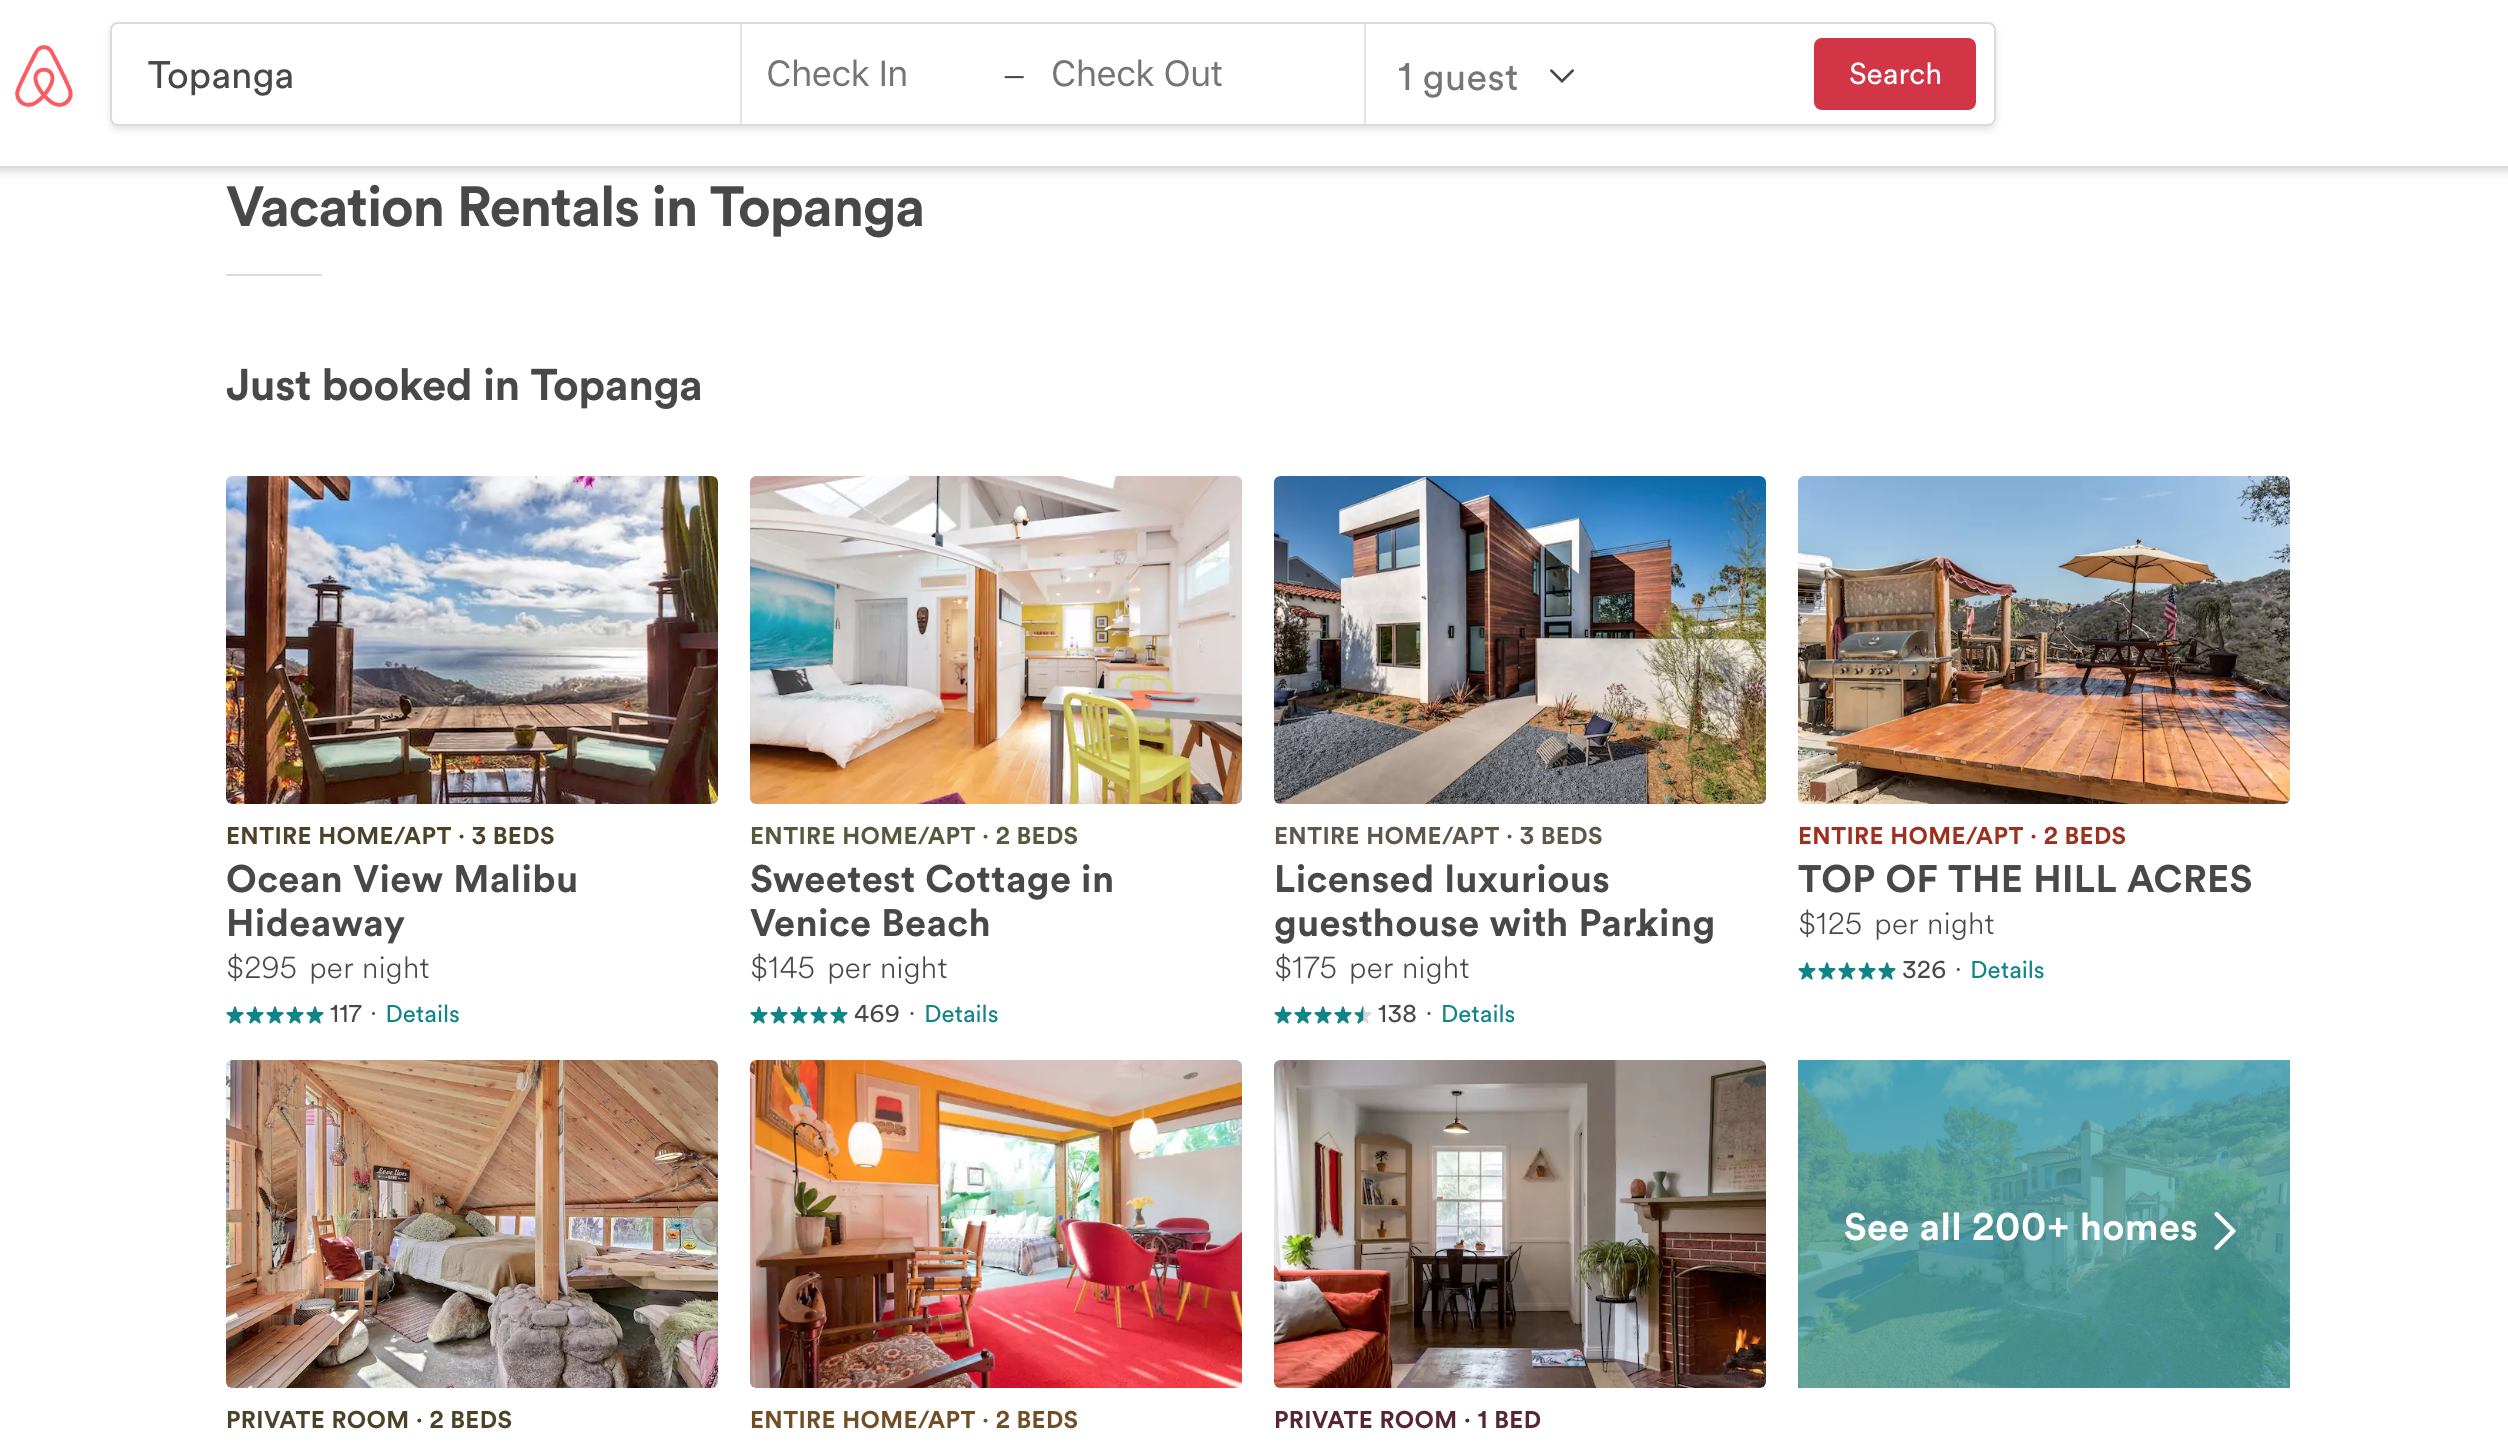 Airbnb Website (Image: Airbnb.com)